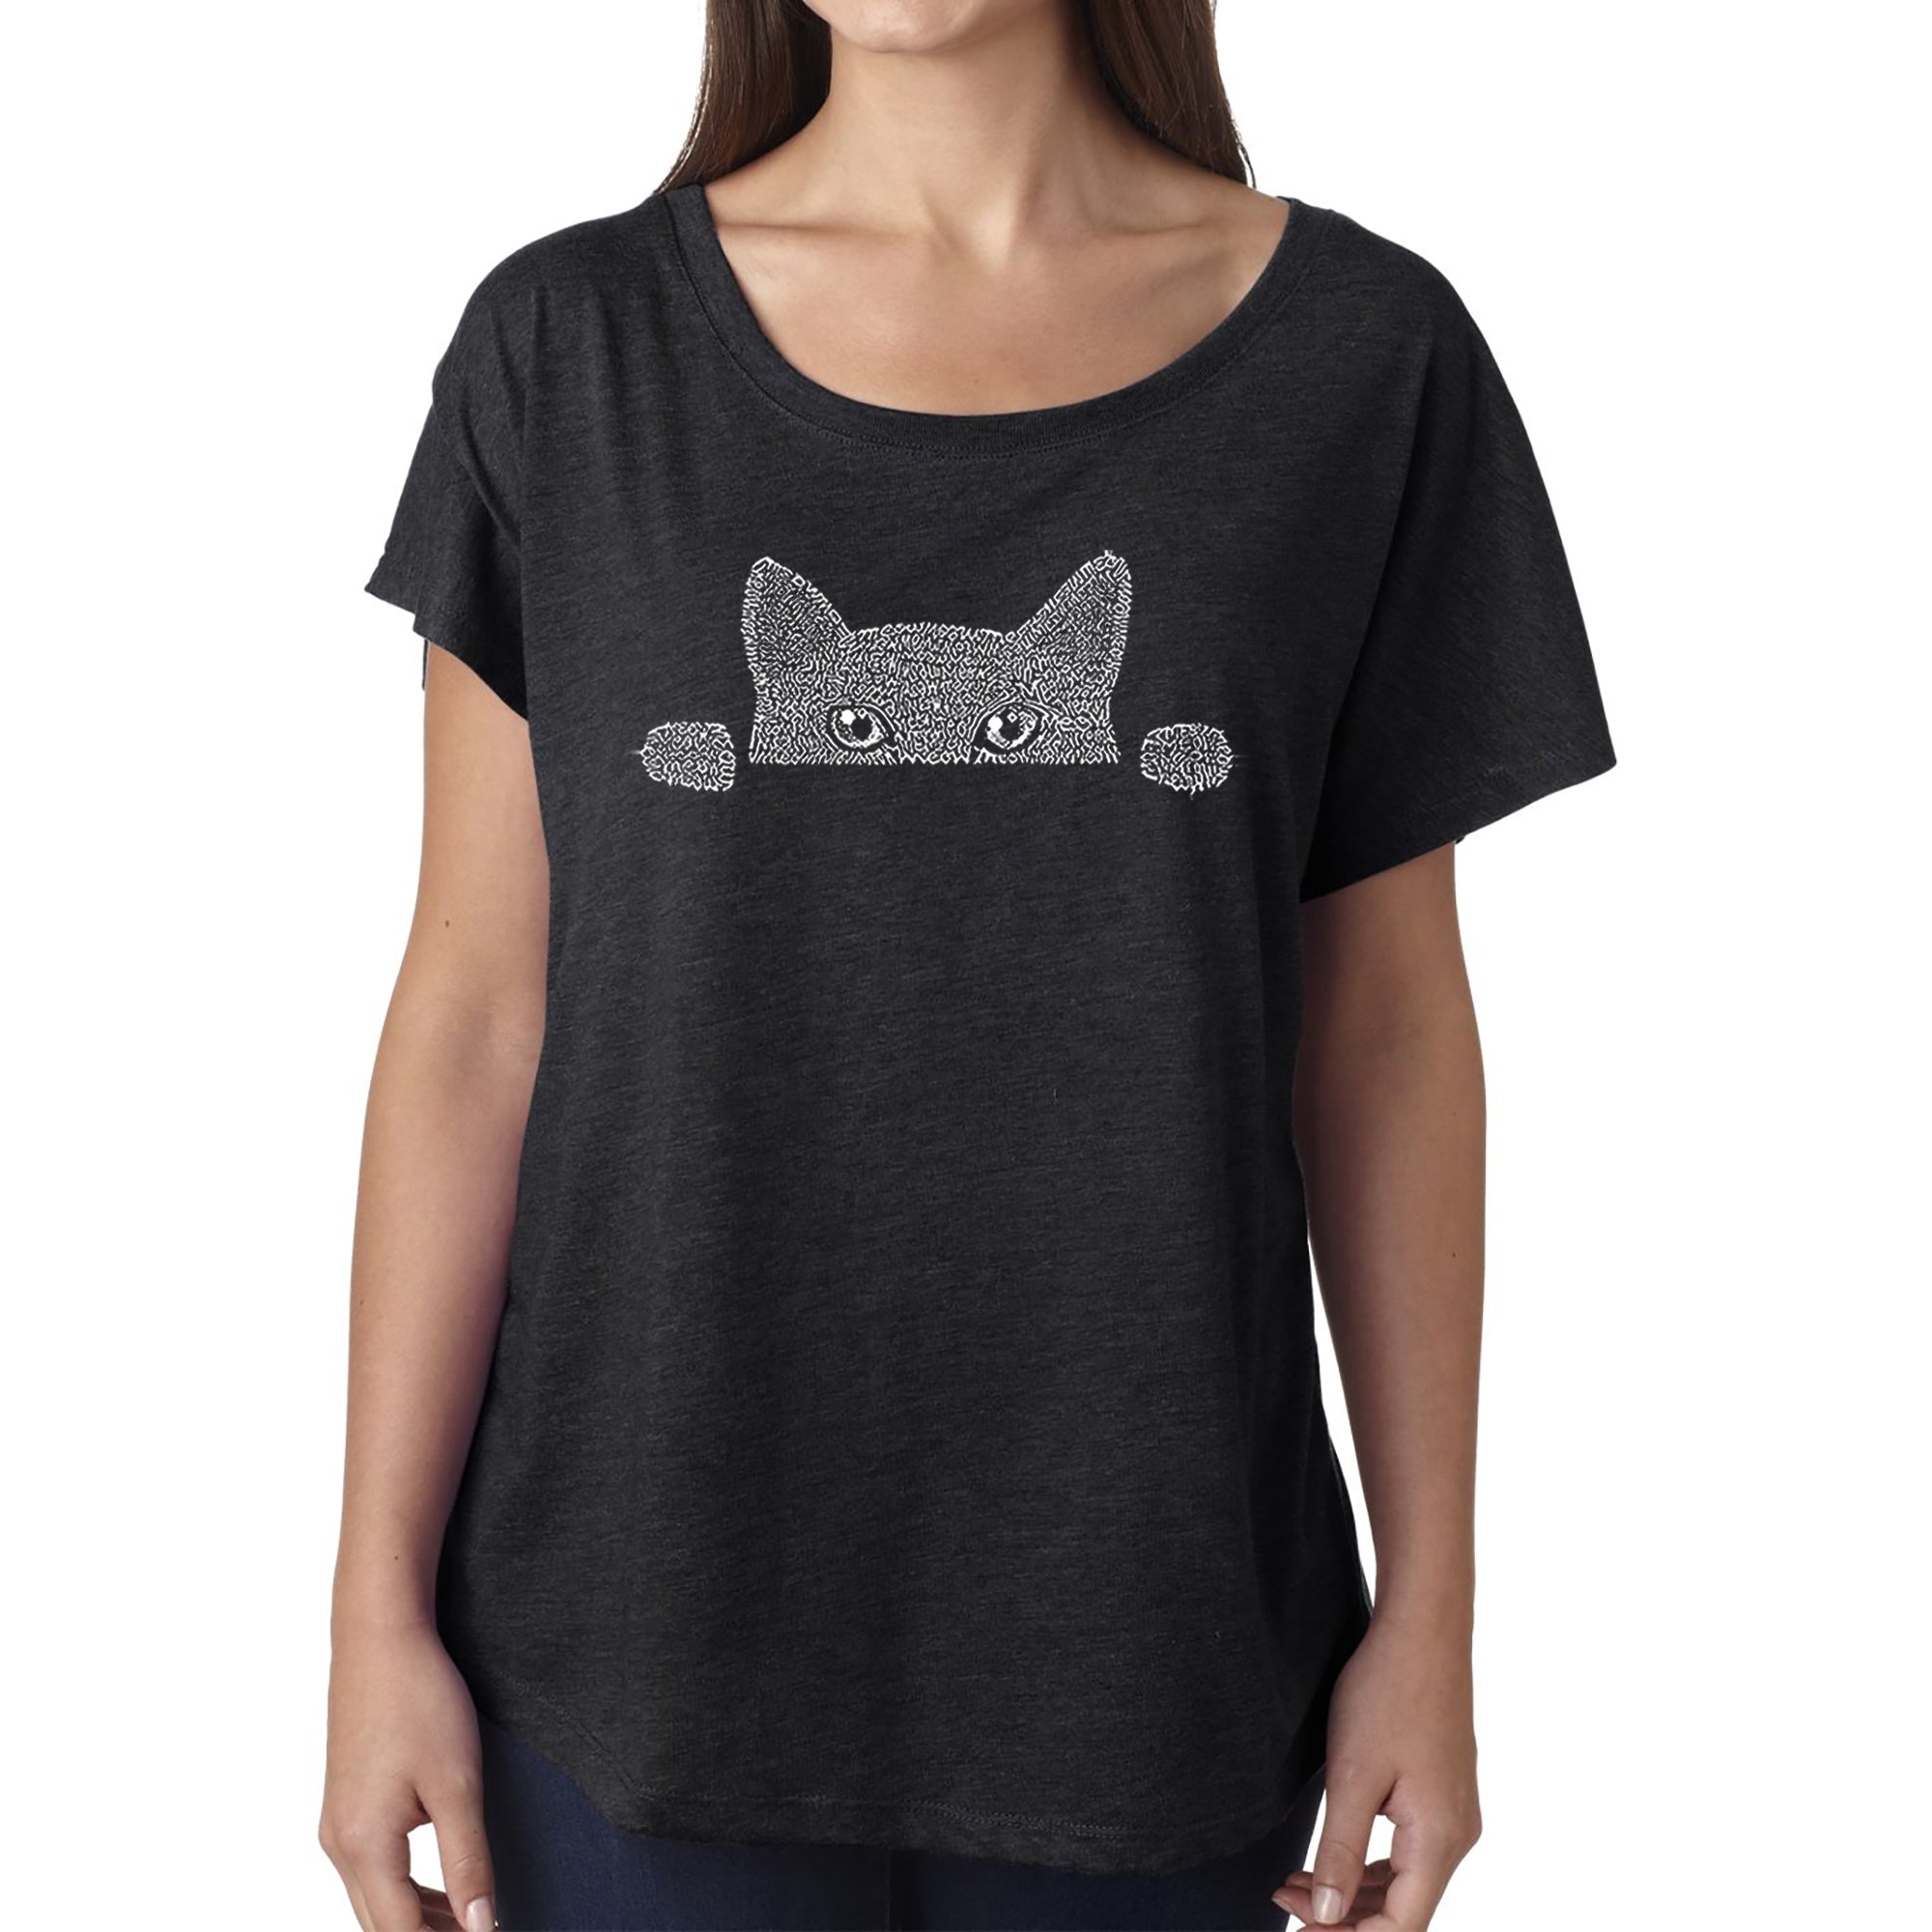 Peeking Cat - Women's Loose Fit Dolman Cut Word Art Shirt - Navy - Small